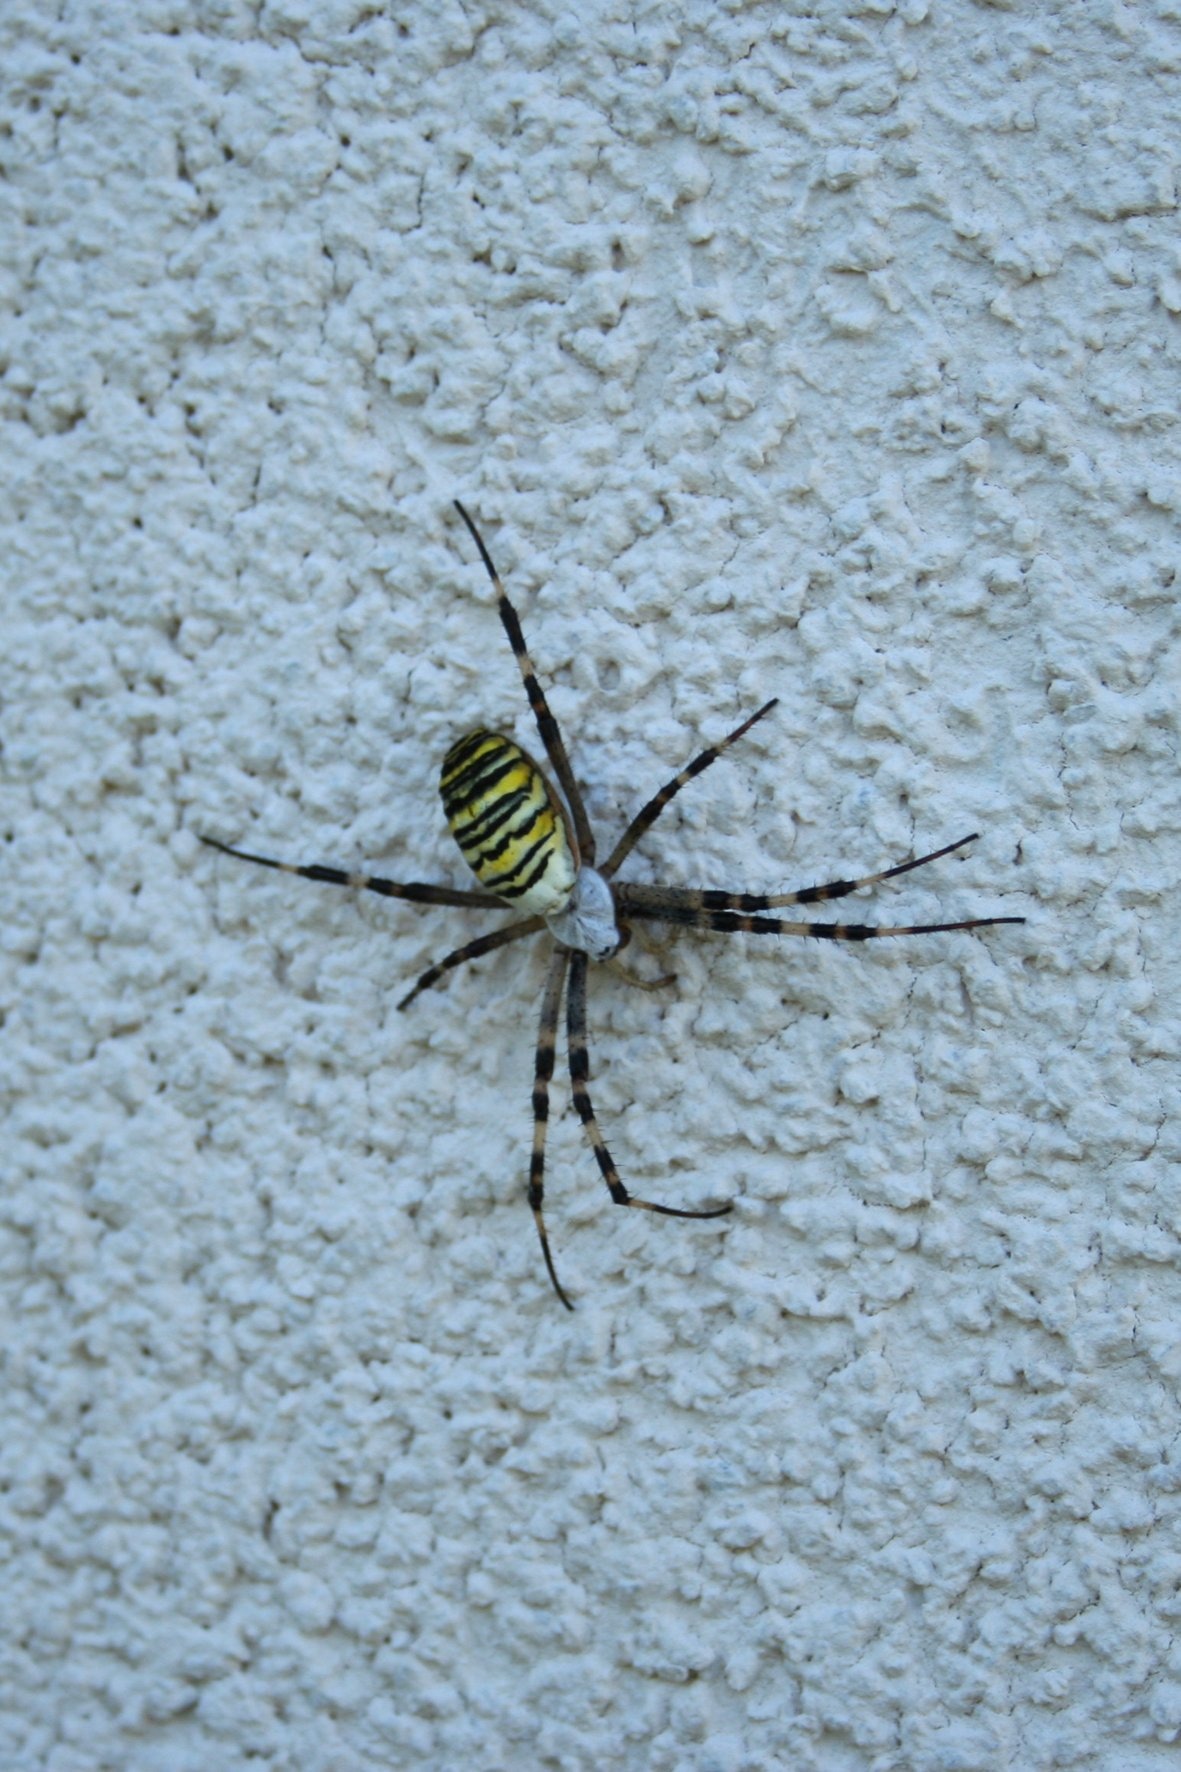 black and yellow 8 legged spider